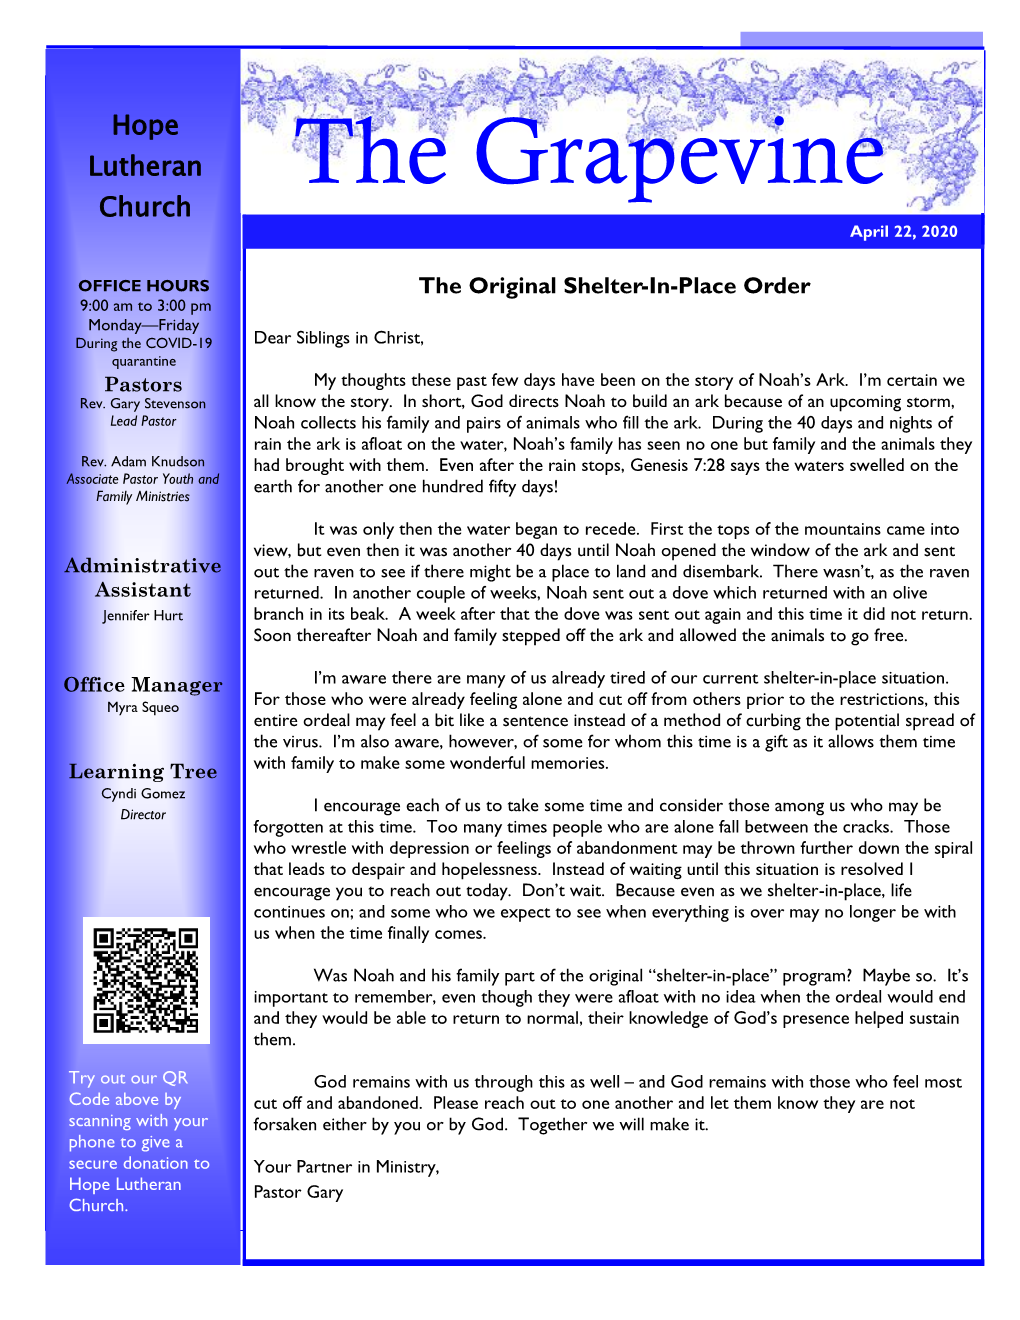 The Grapevine Church April 22, 2020